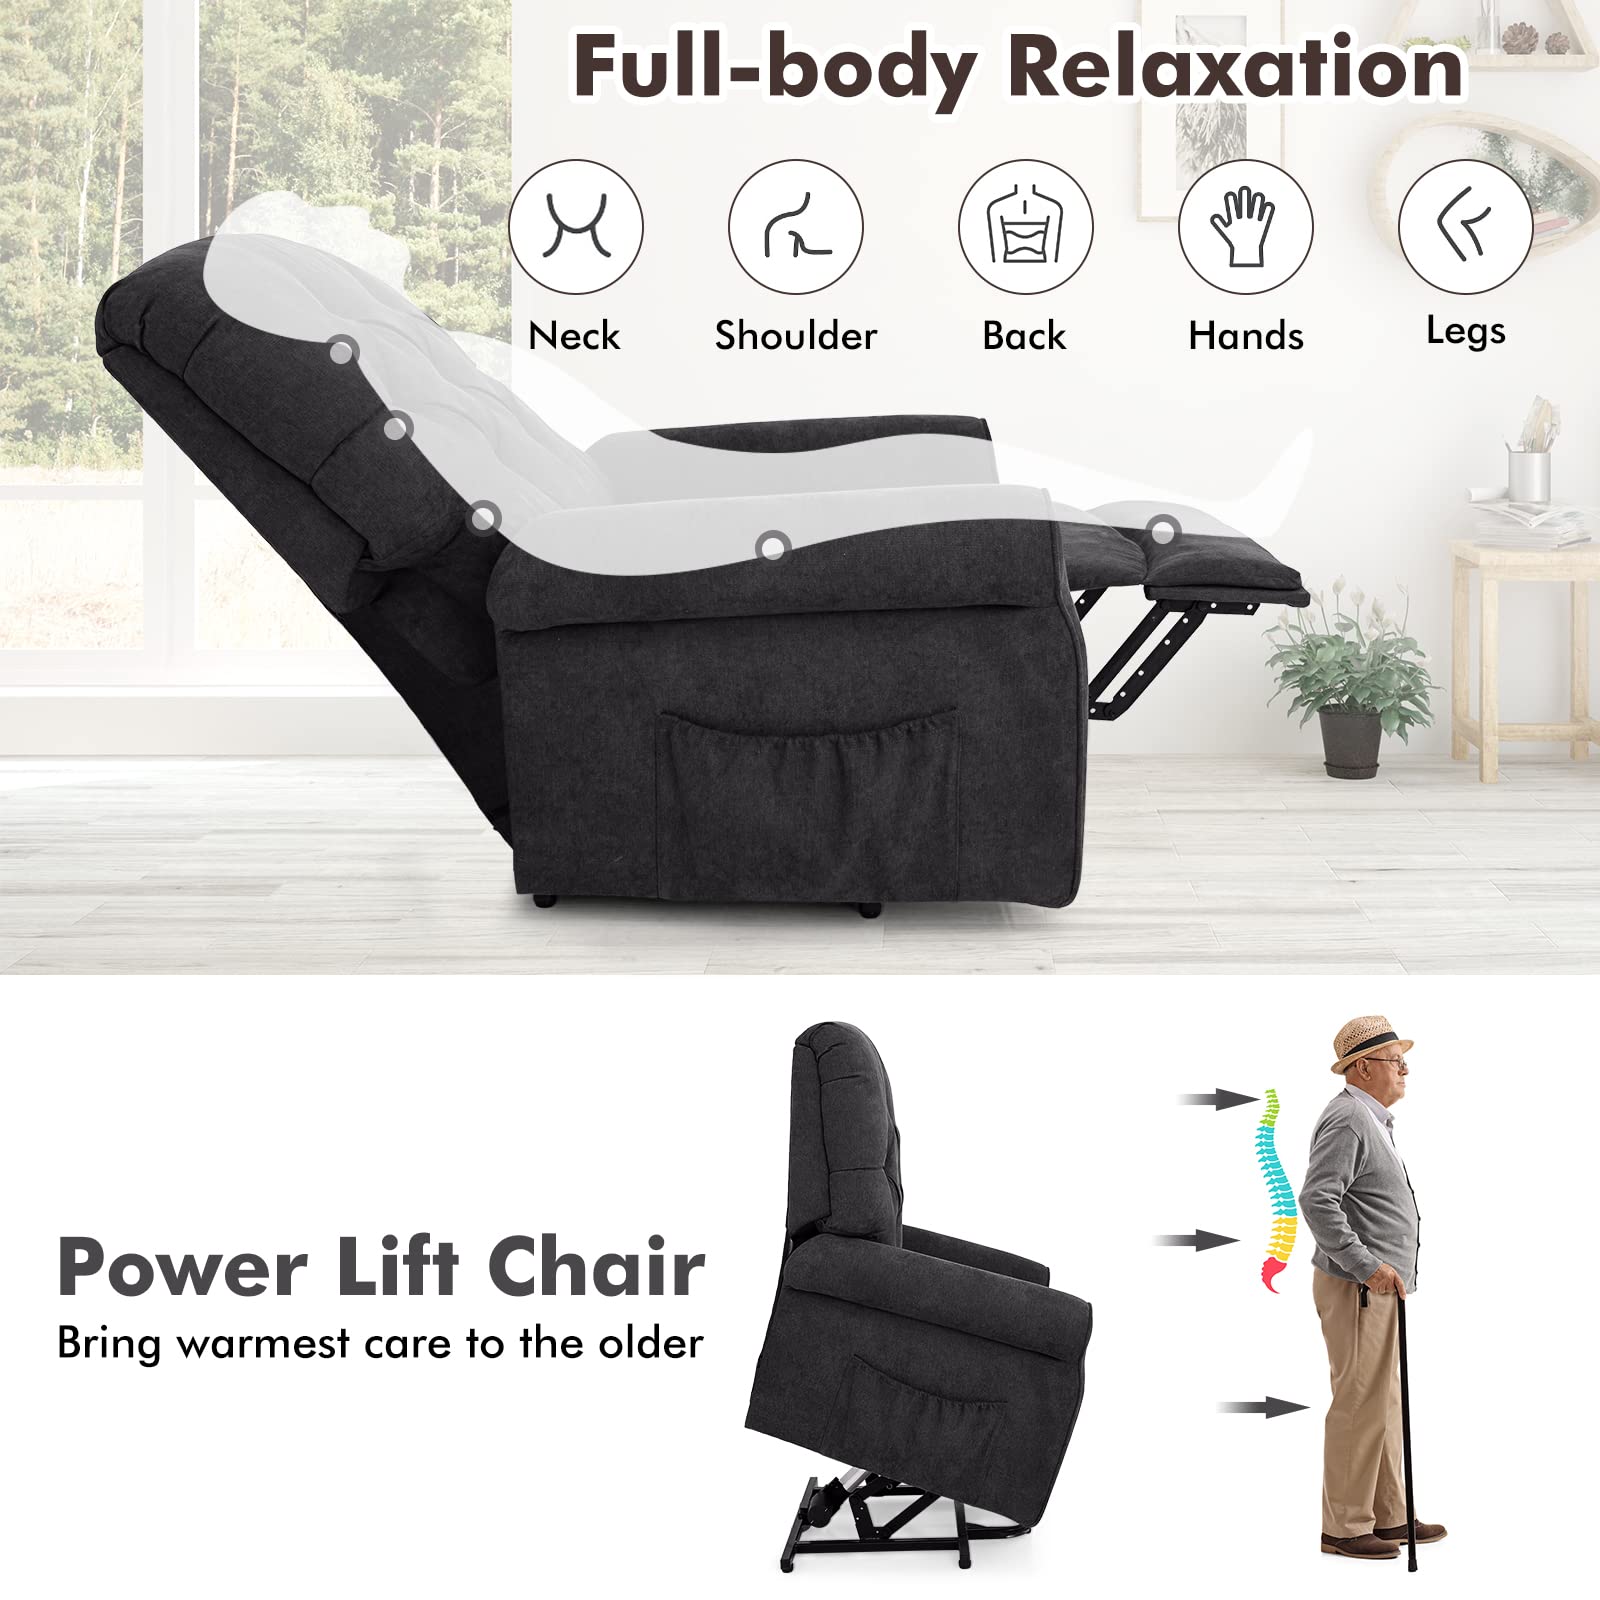 Giantex Power Lift Chair Electric Recliner for Elderly, Adjustable Backrest Footrest